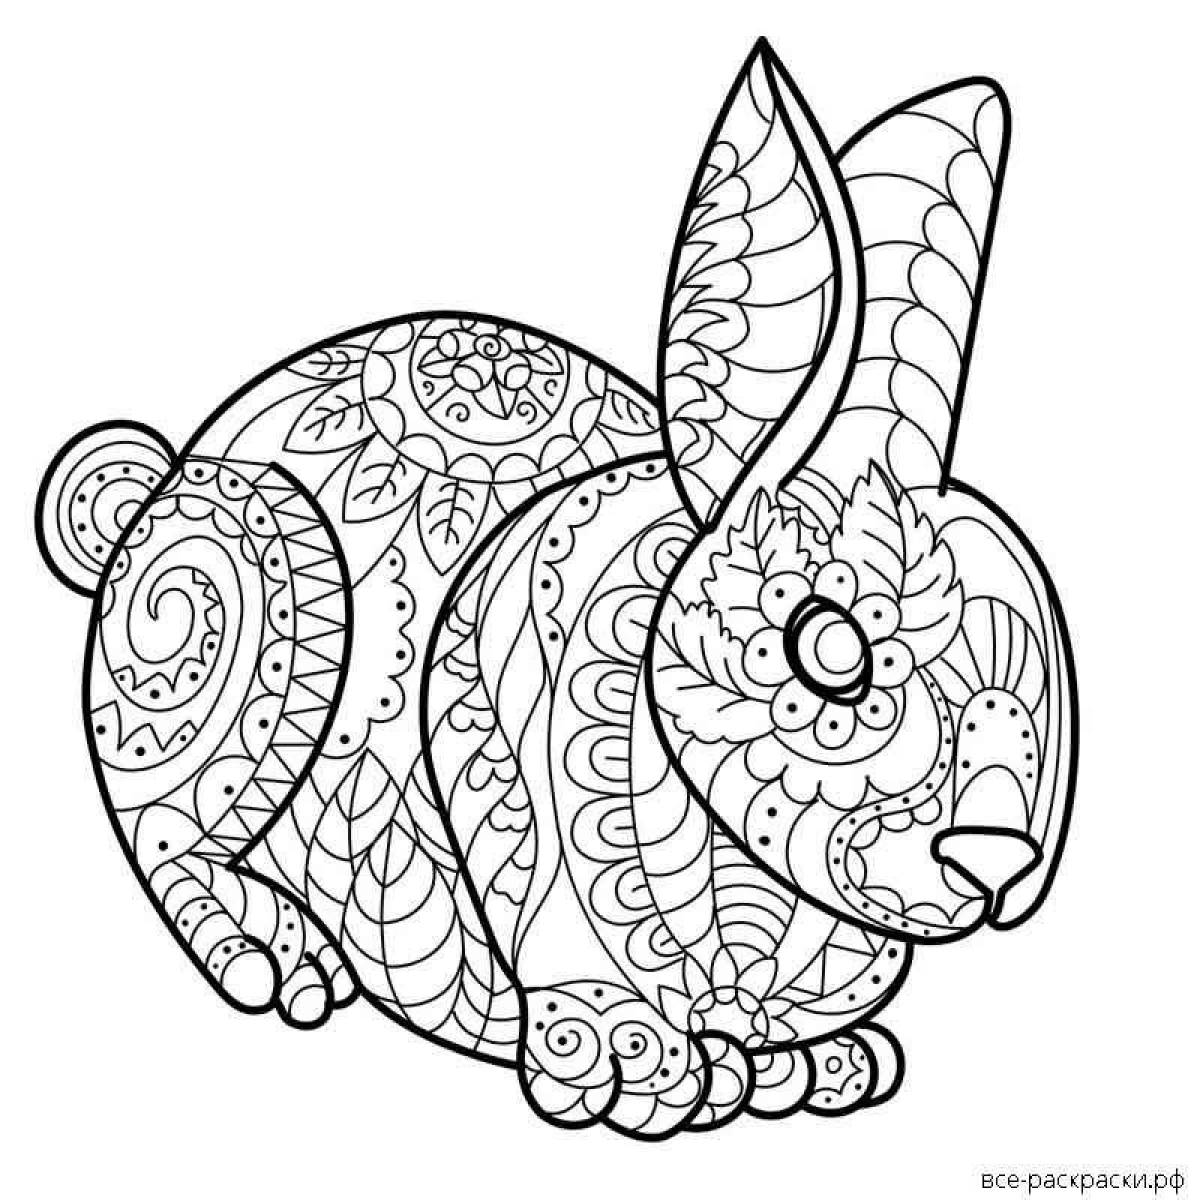 Bright anti-stress rabbit coloring book